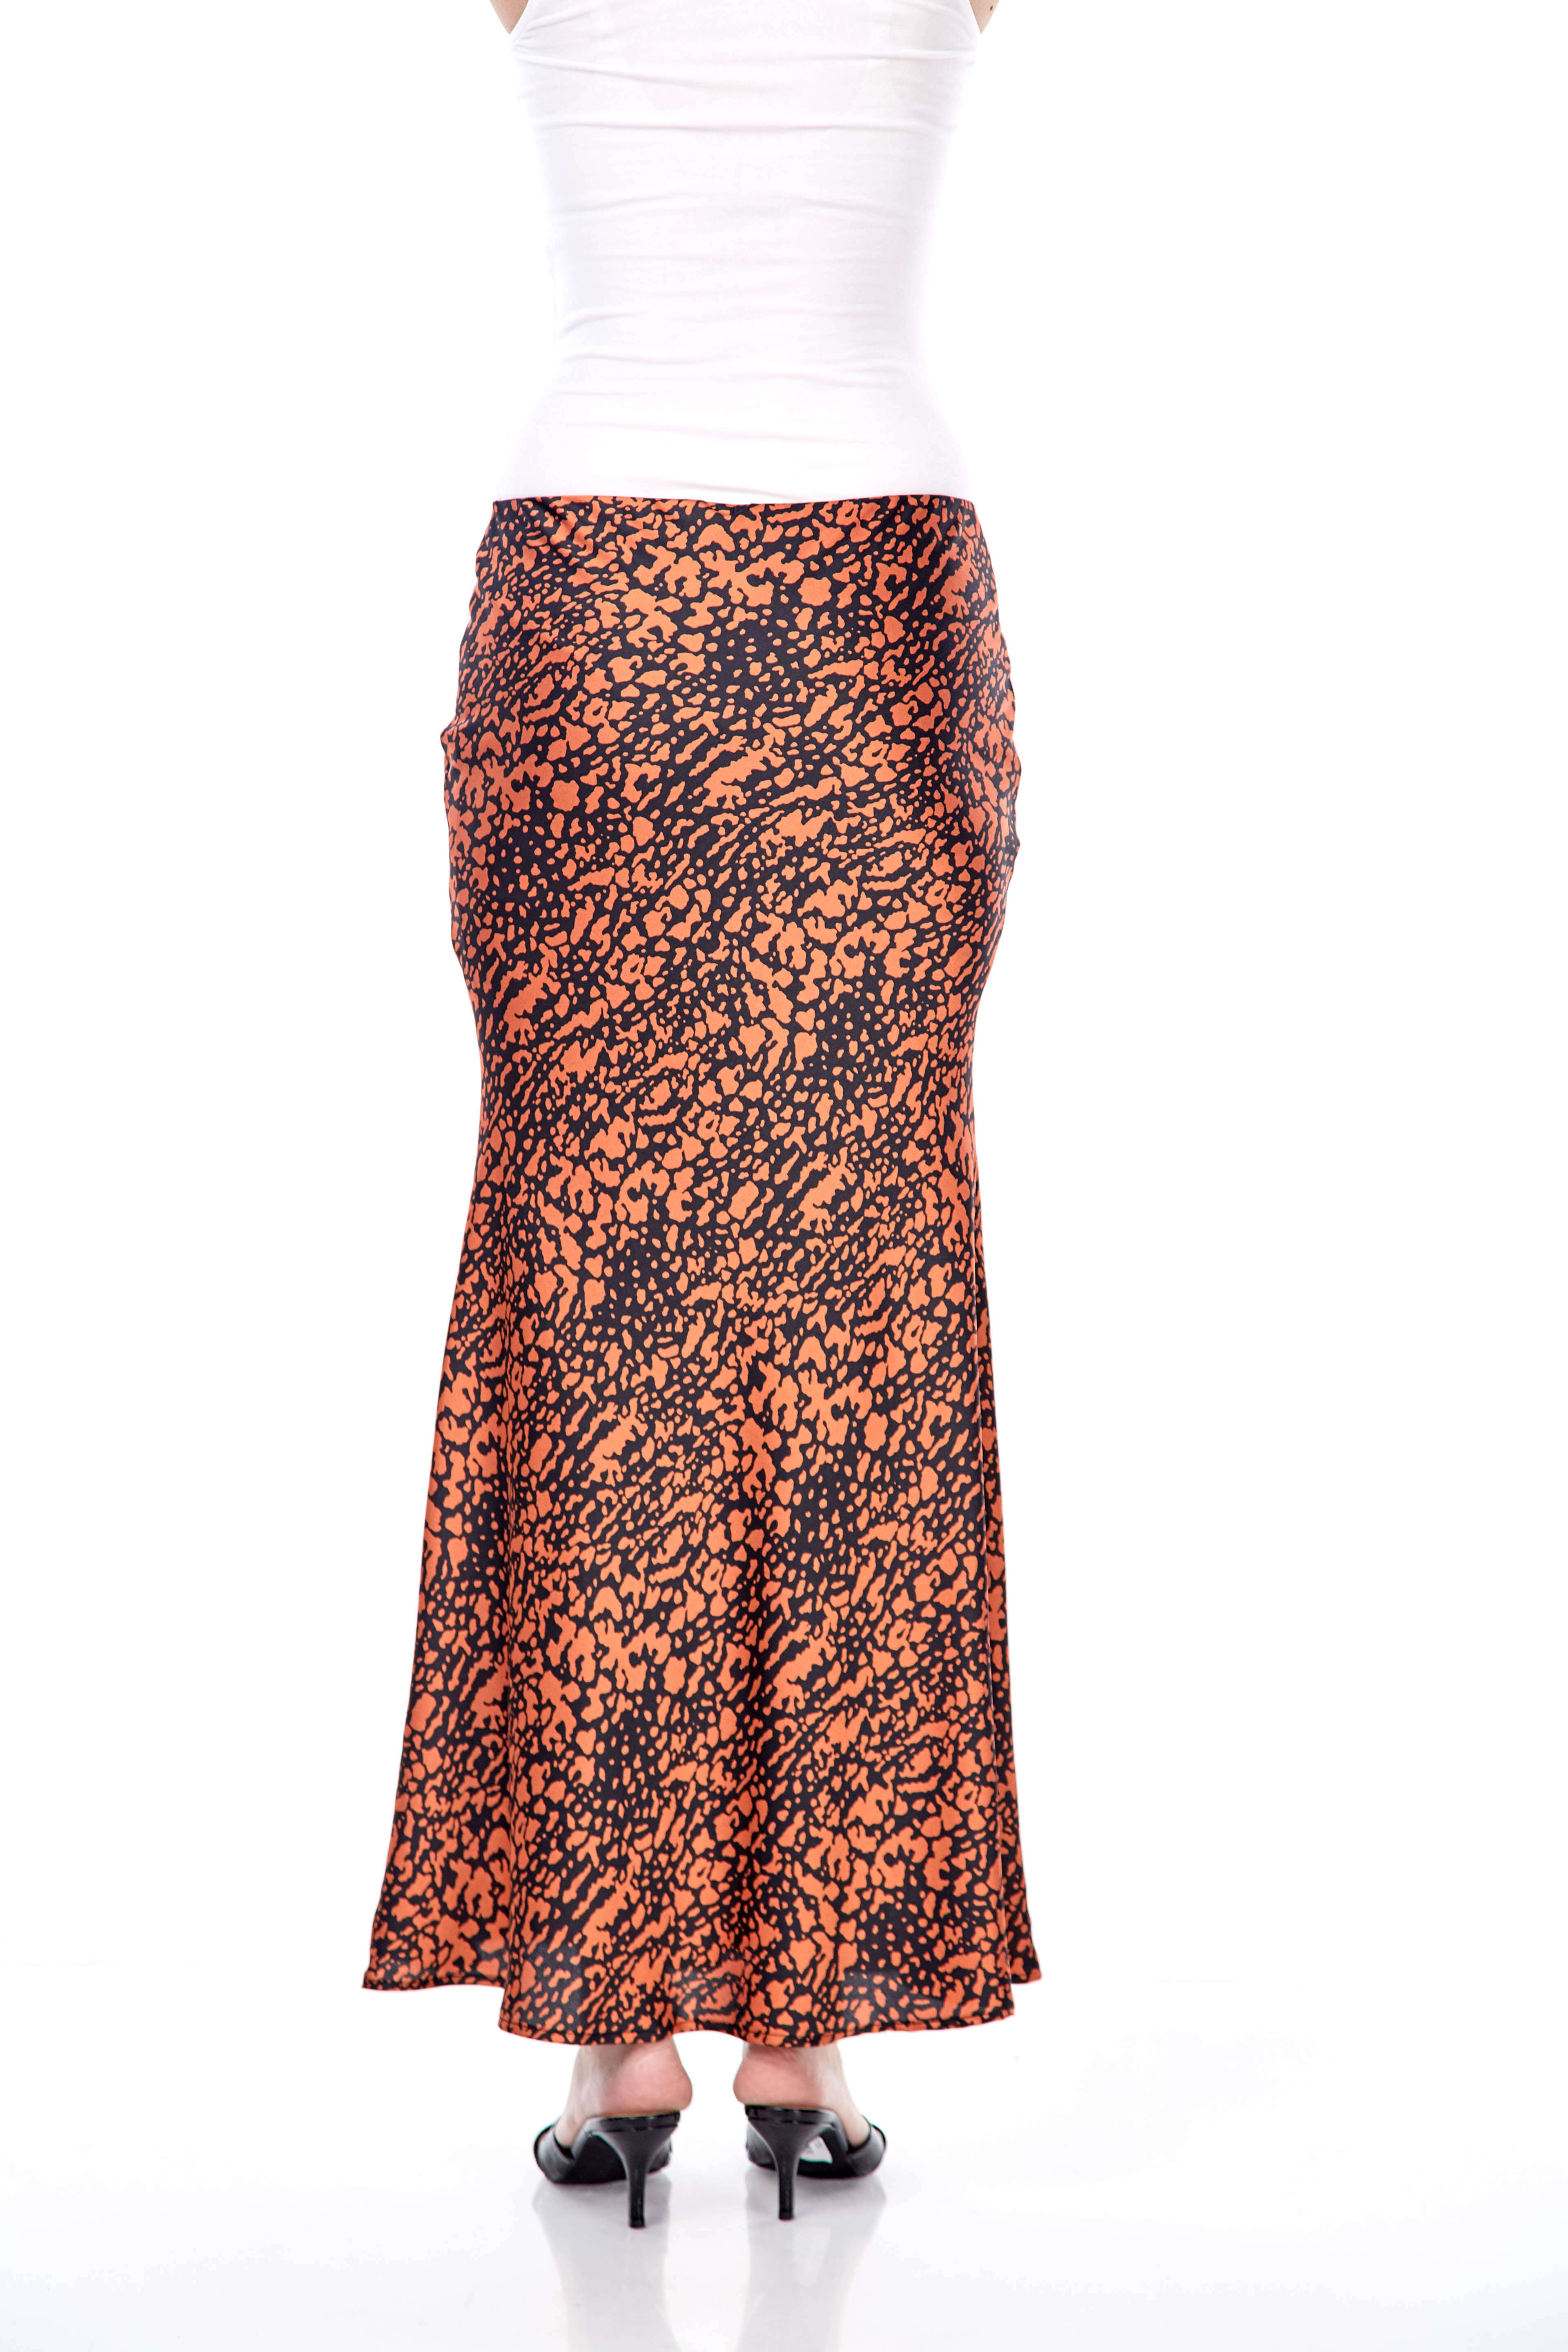 Keisha Orange Printed Skirt (3)